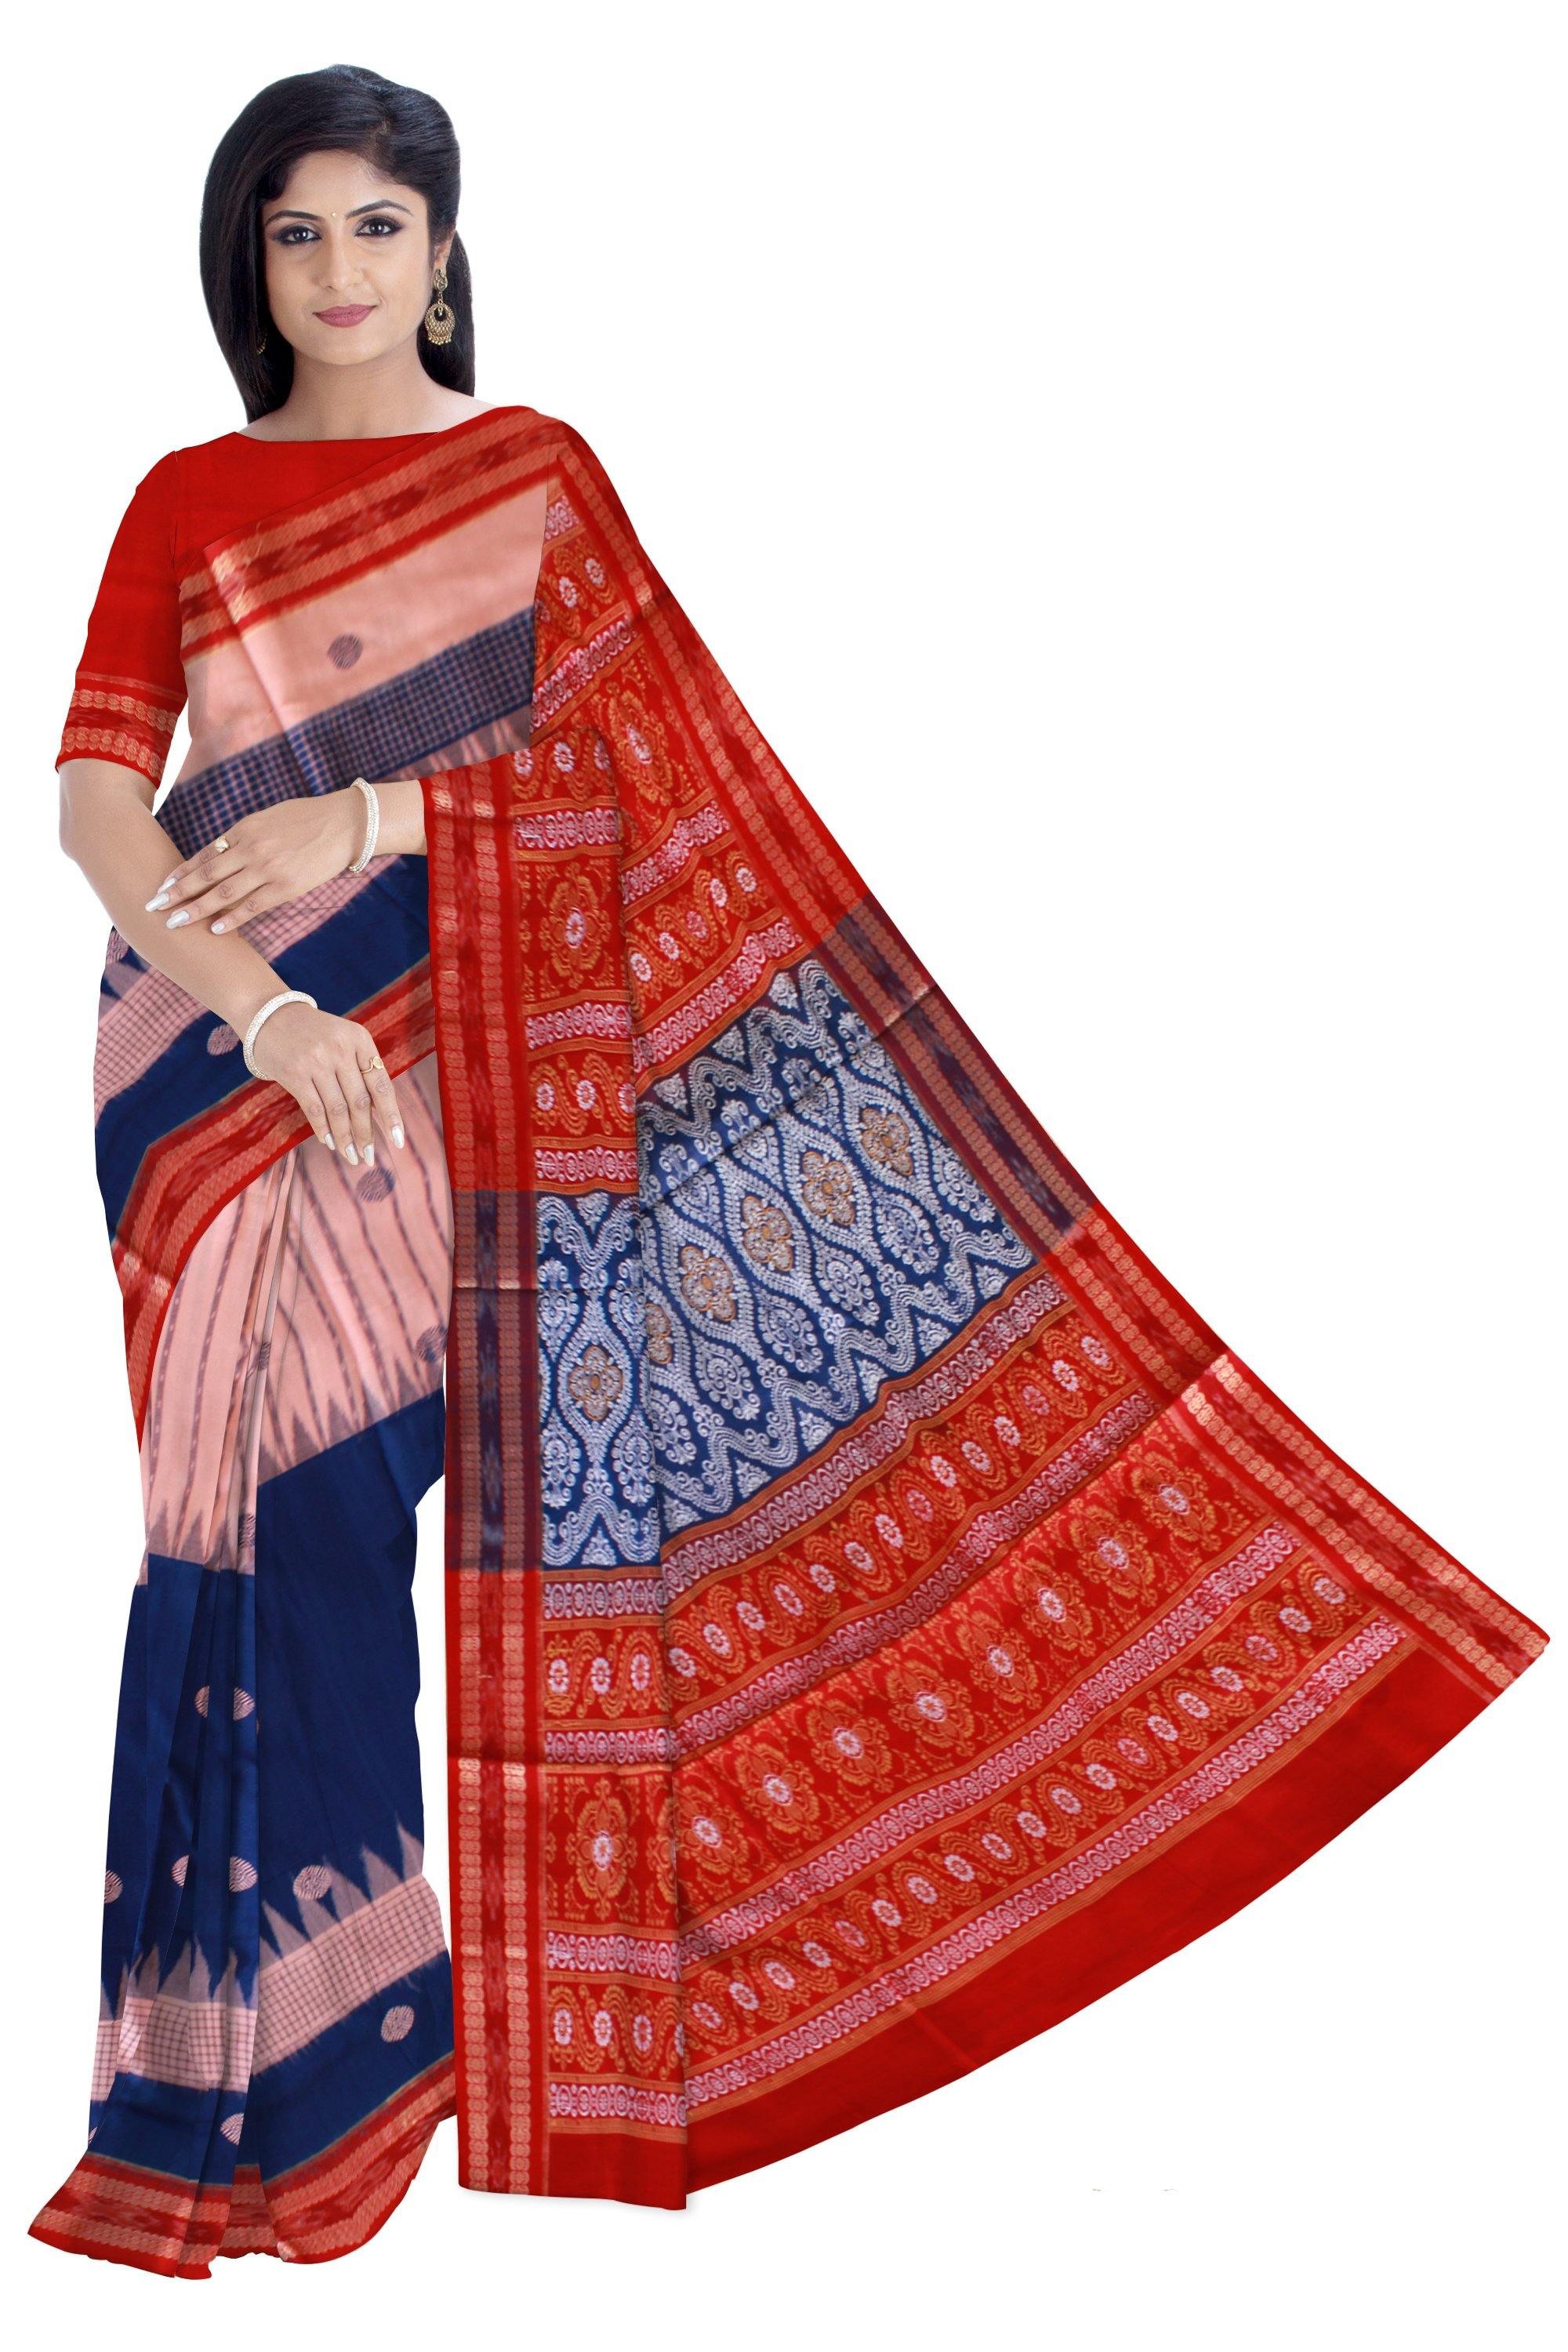 Sambalpuri bomkei saree in dual color with blouse piece. - Koshali Arts & Crafts Enterprise